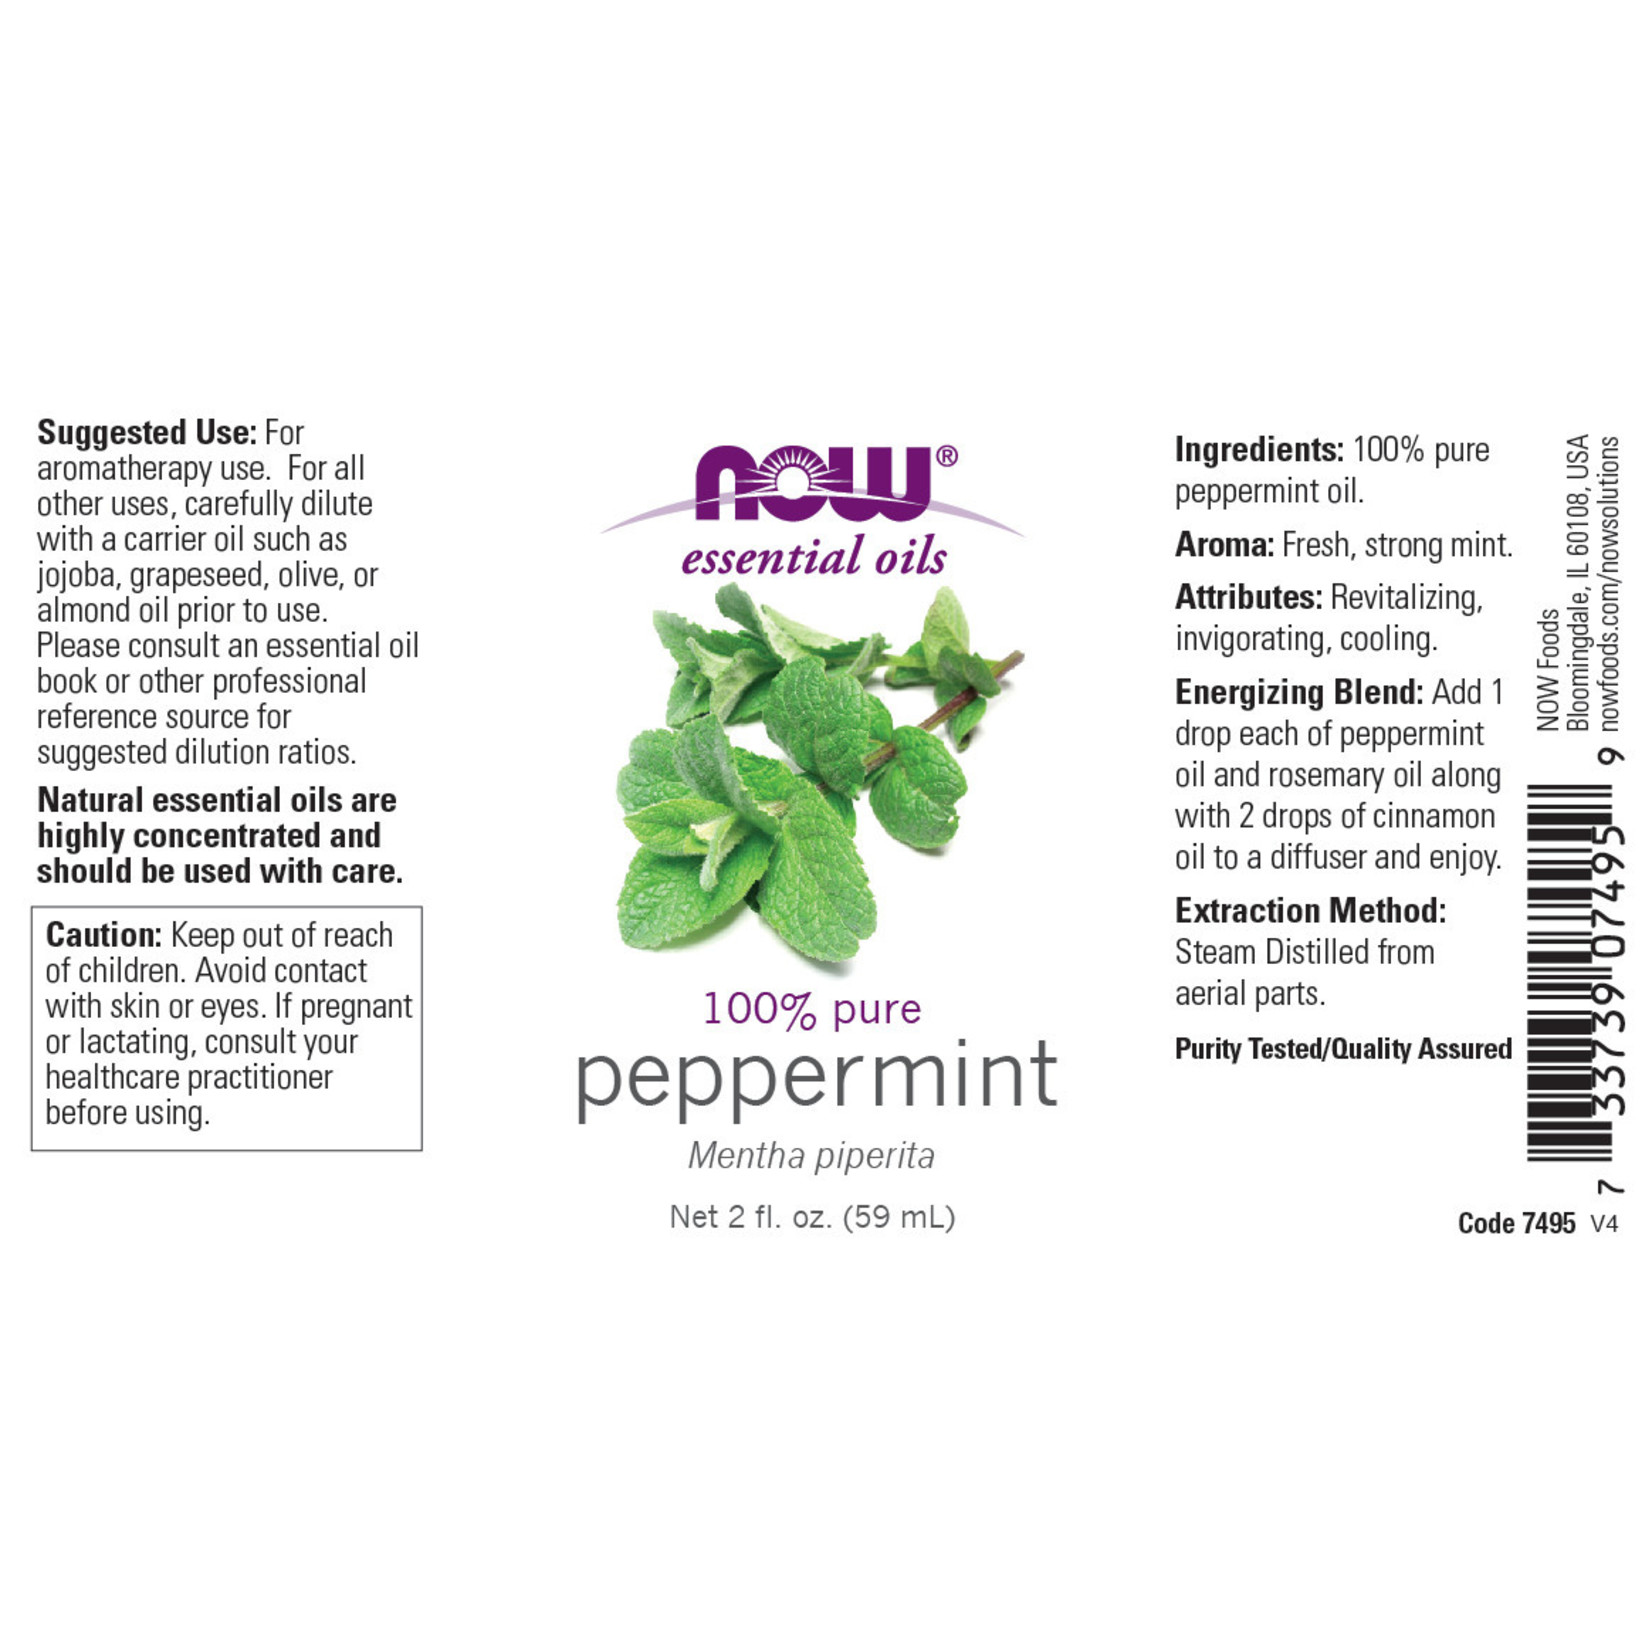 Now Now - Peppermint Oil - 2 oz